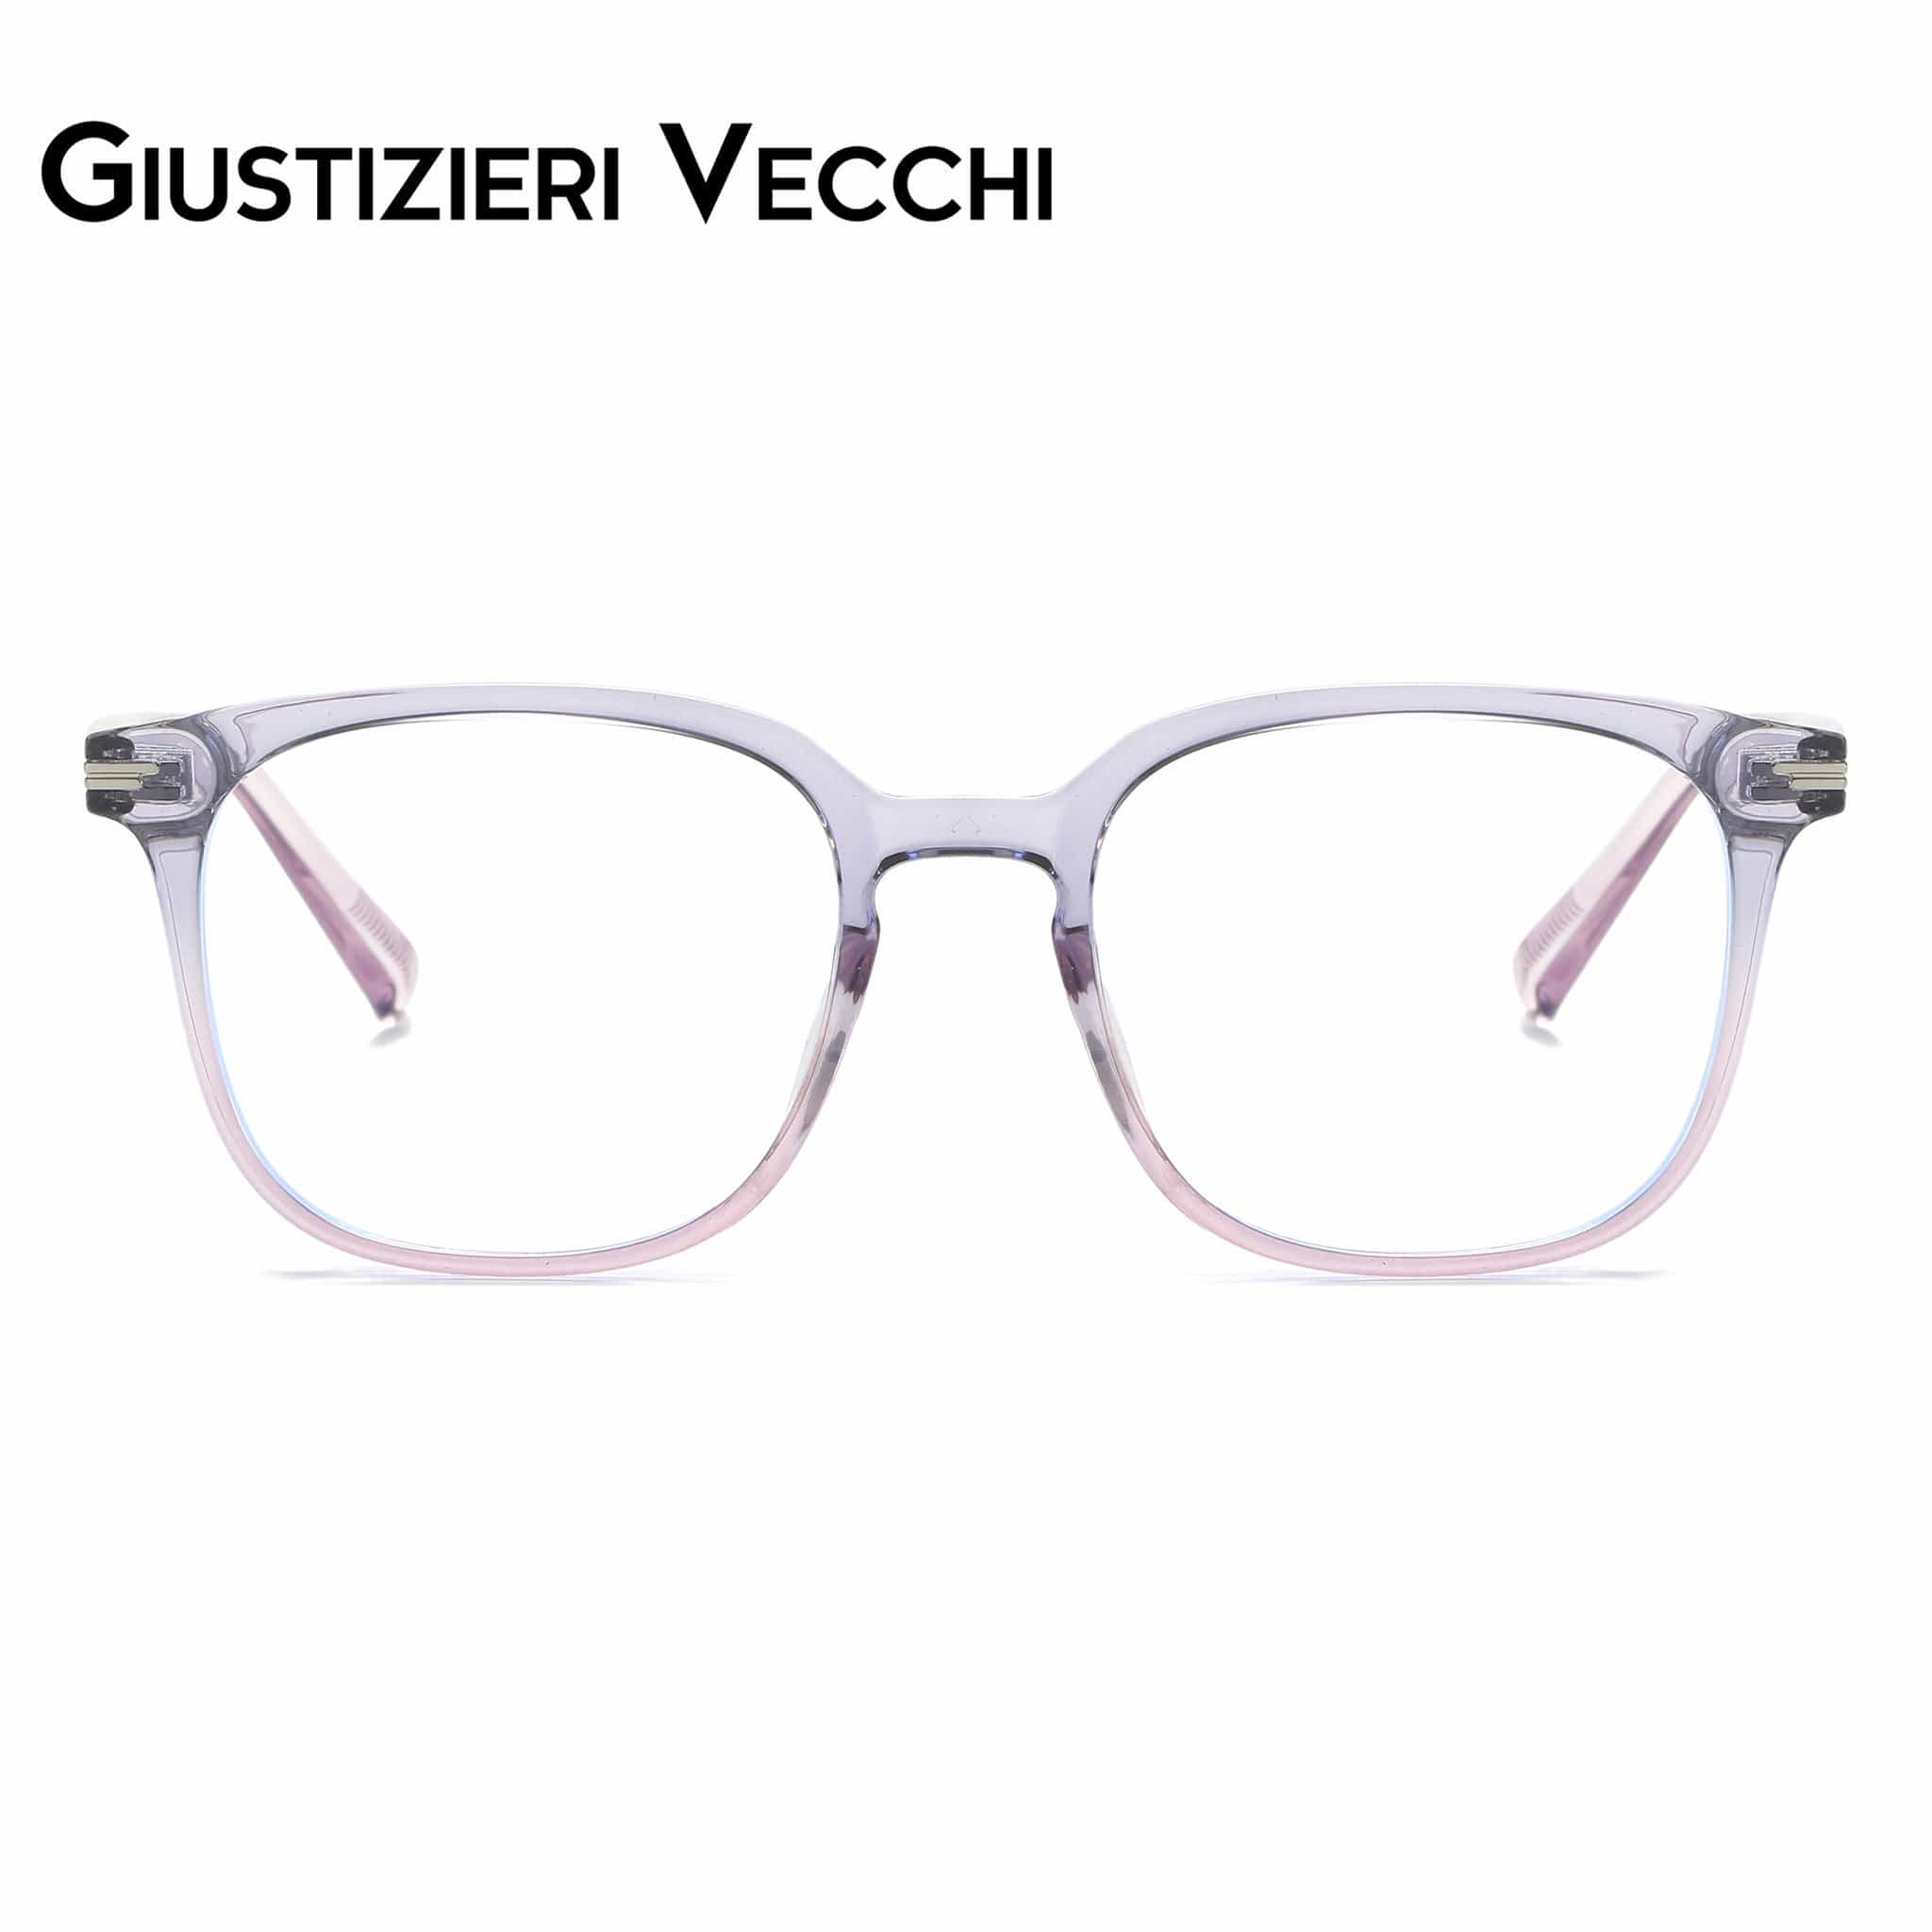 GIUSTIZIERI VECCHI Eyeglasses Medium / Gradient Lavender SkyBloom Duo